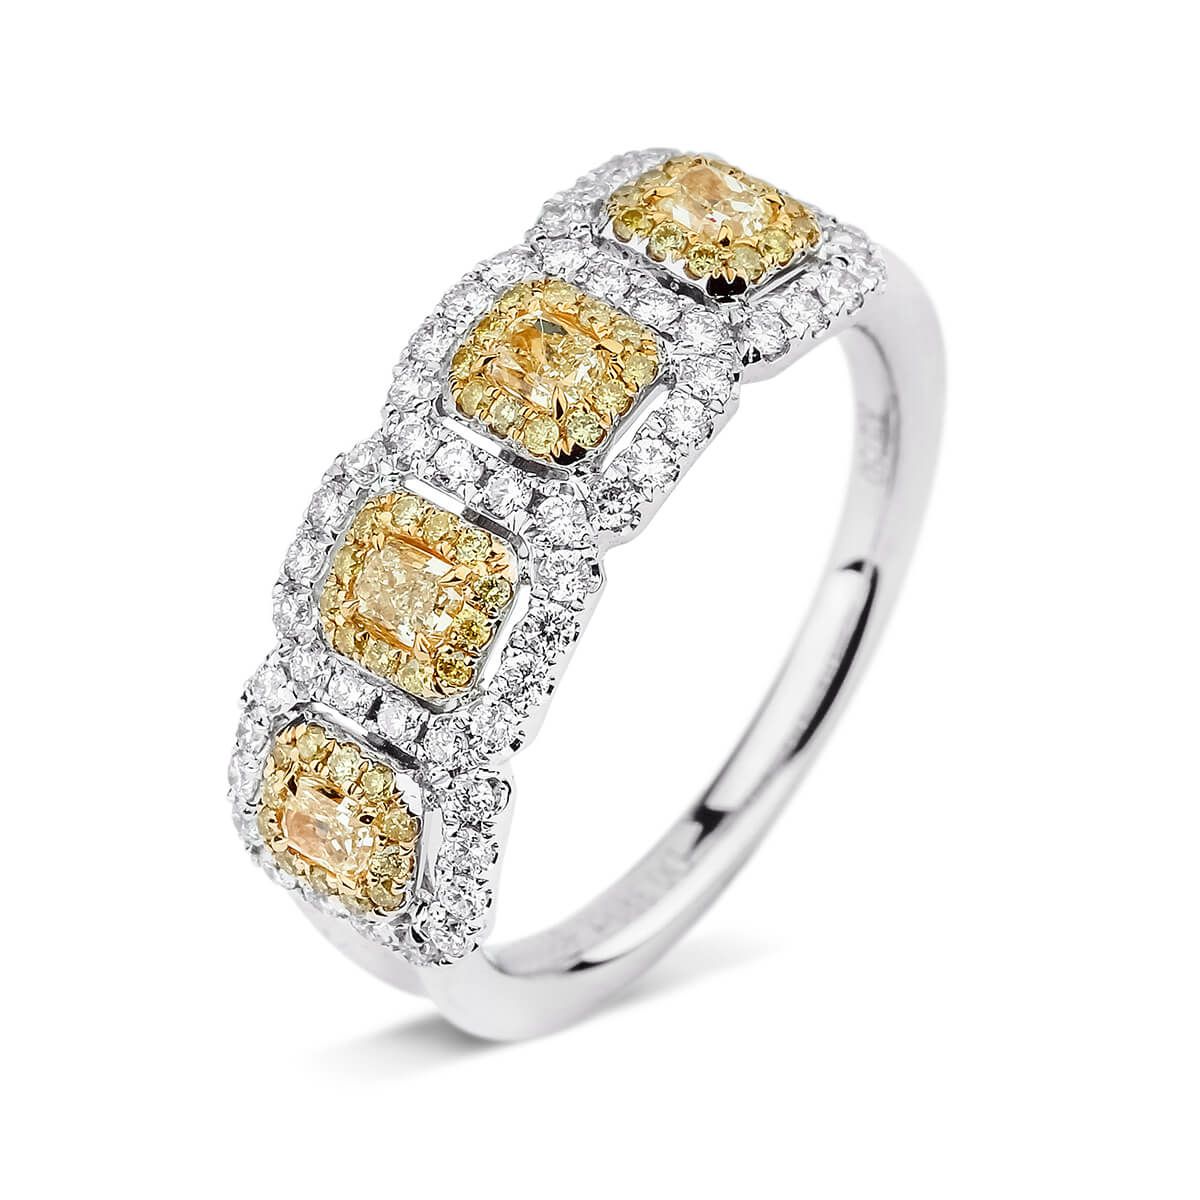 Fancy Intense Yellow Diamond Ring, 1.23 Ct. TW, Radiant shape